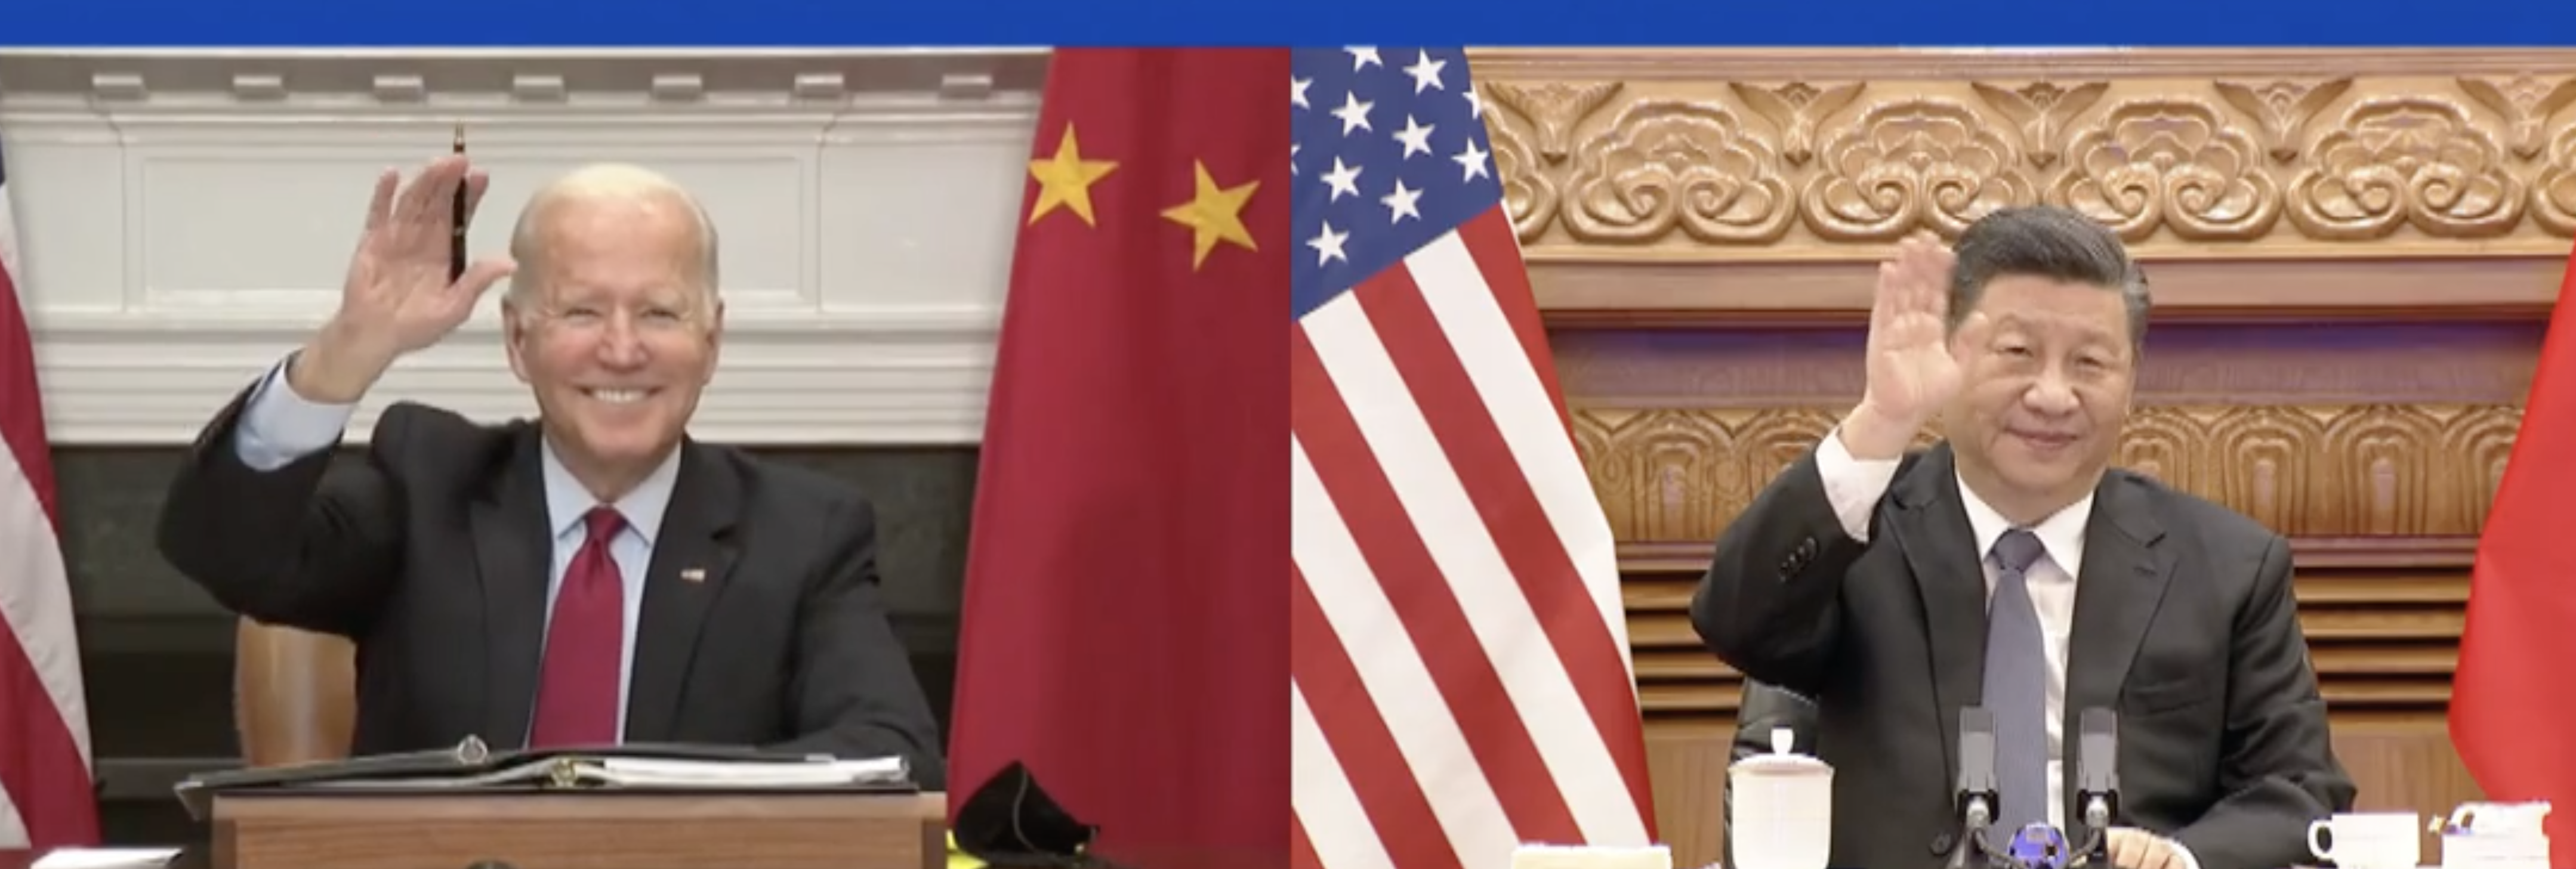 Joe Biden discuție cu Xi Jinping